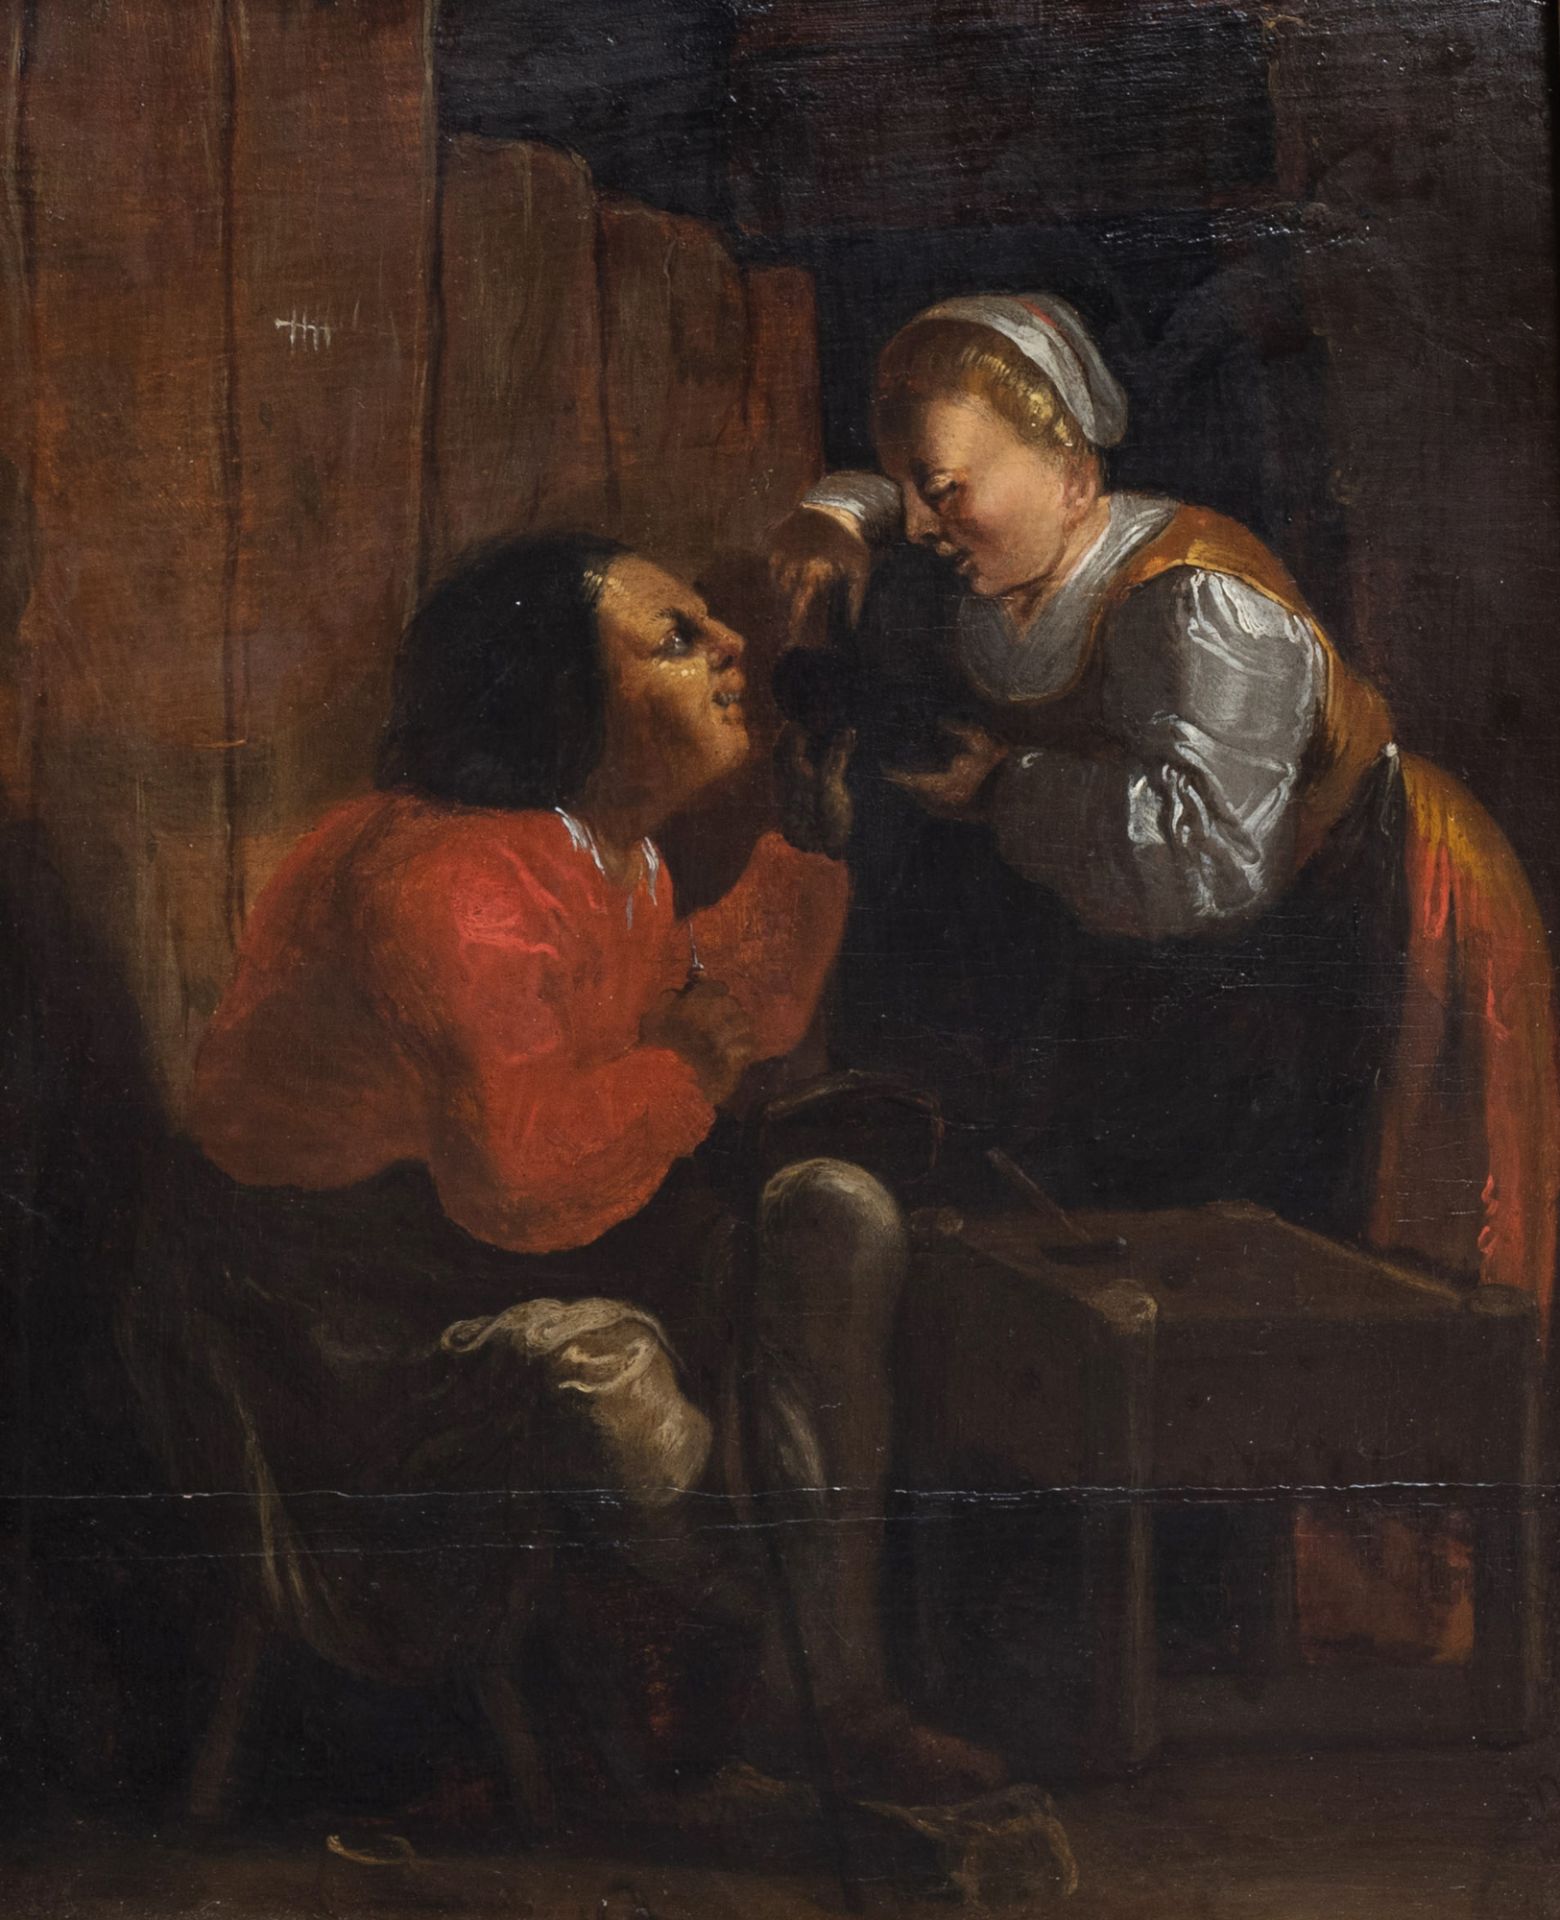 Flemish school, in the manner of Jan van der Venne (ca. 1616-1672): The shoemaker, oil on panel, 17t